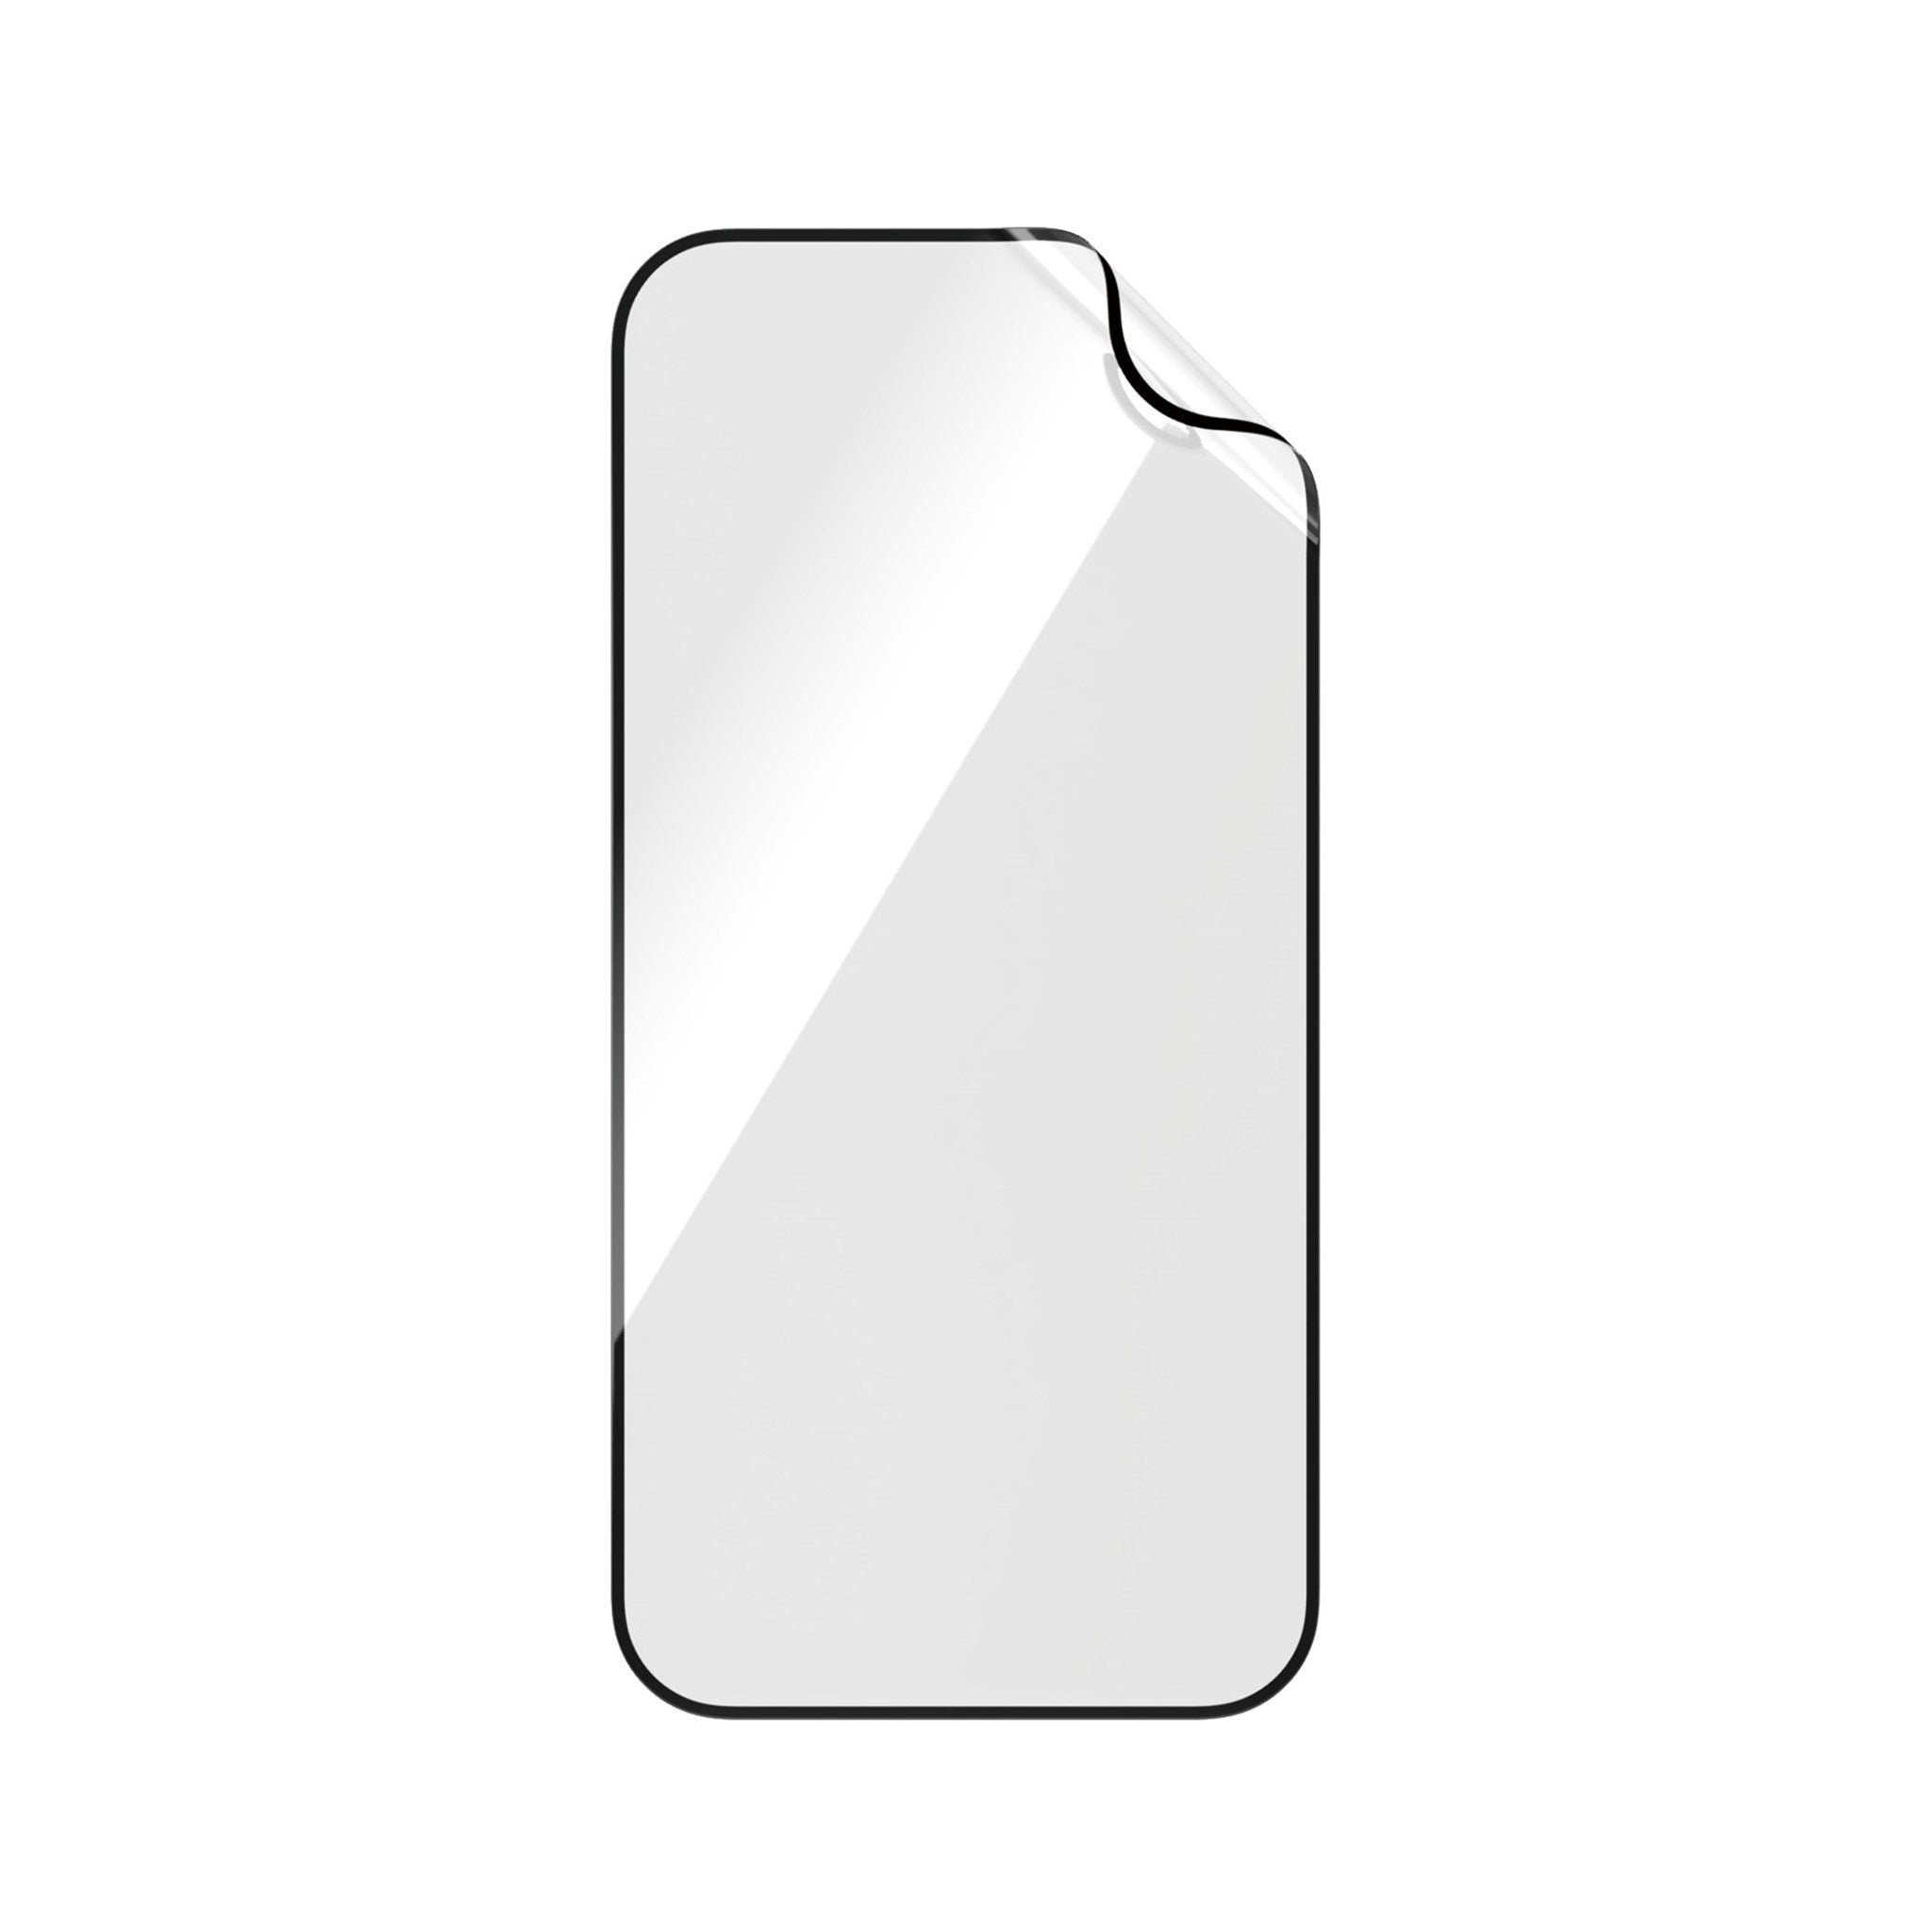 PANZERGLASS MATRIX Ultra-Wide Fit Displayschutz(für Apple iPhone 15)